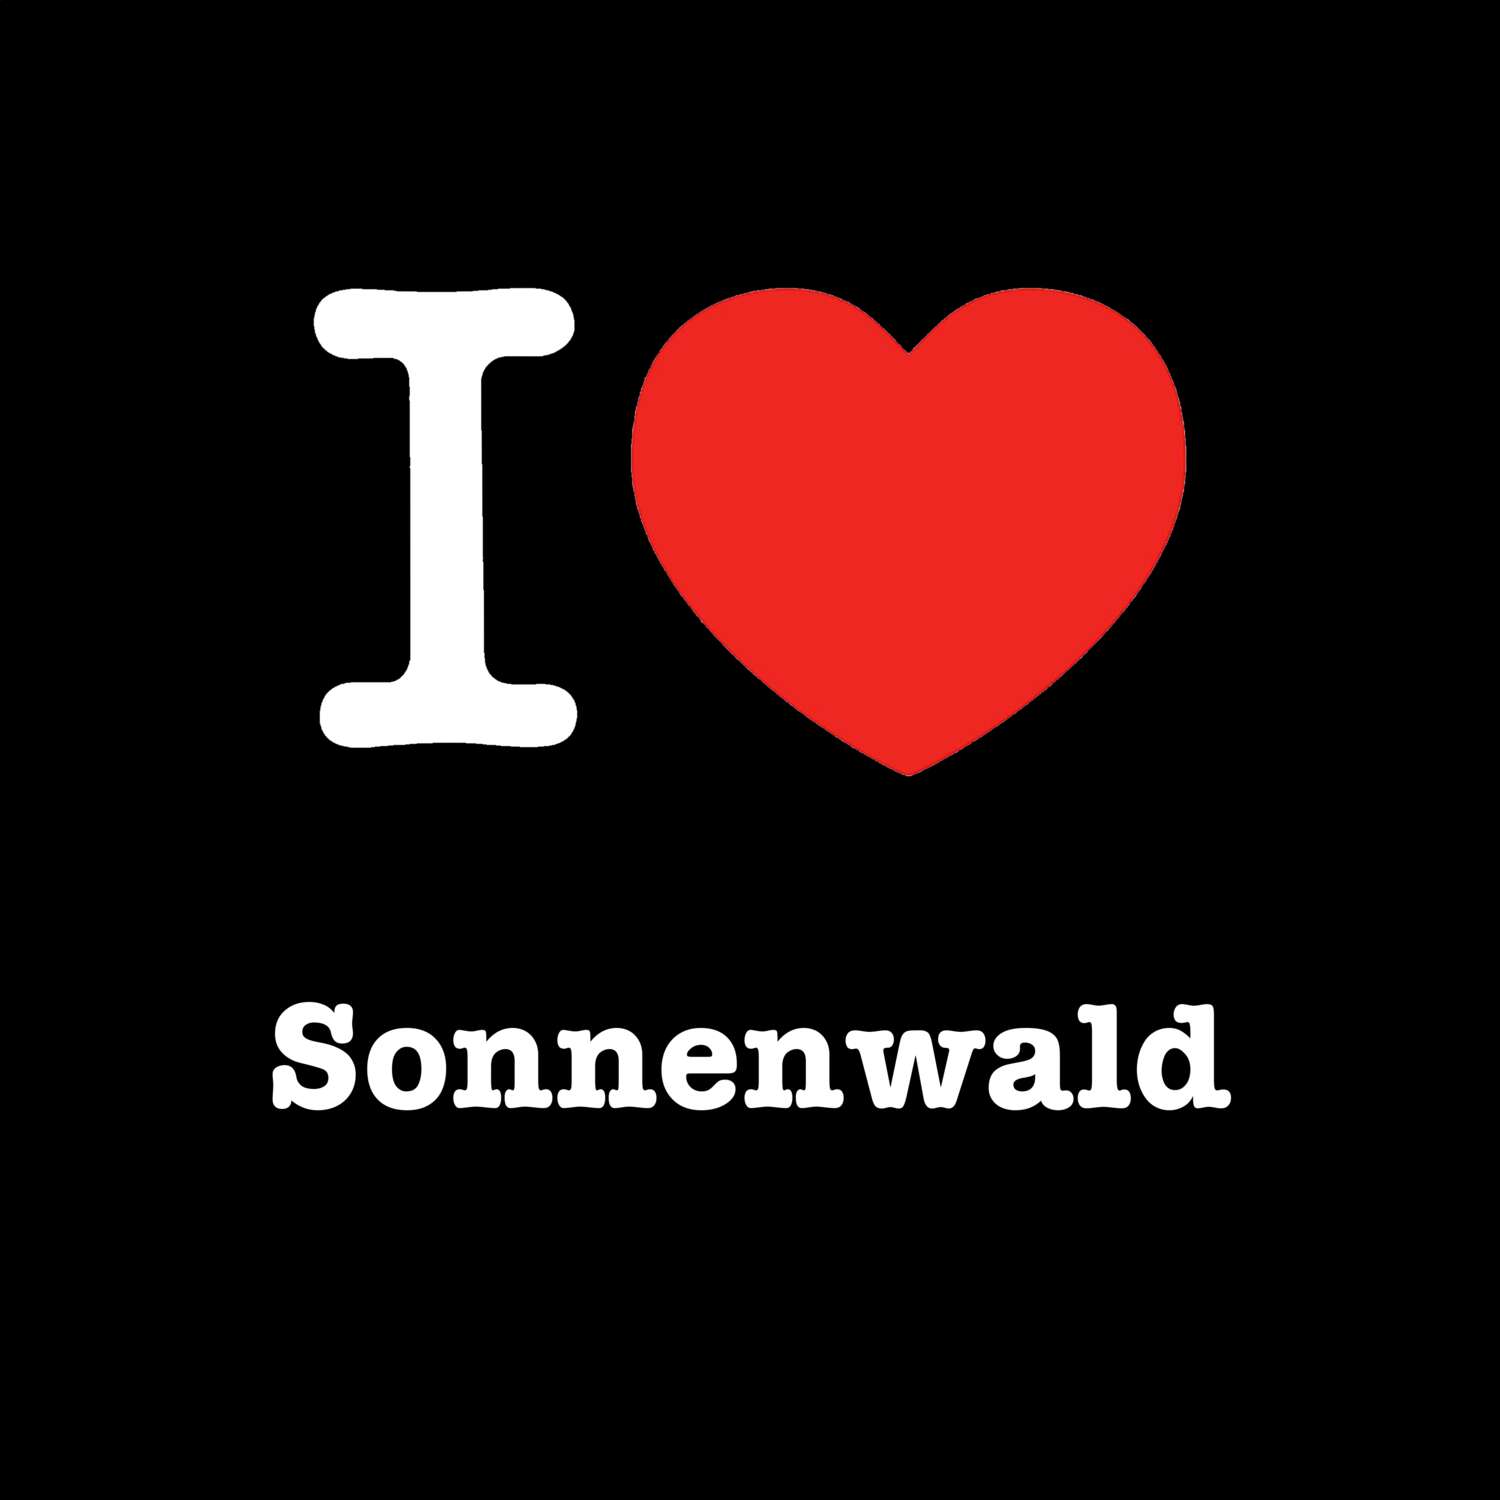 Sonnenwald T-Shirt »I love«